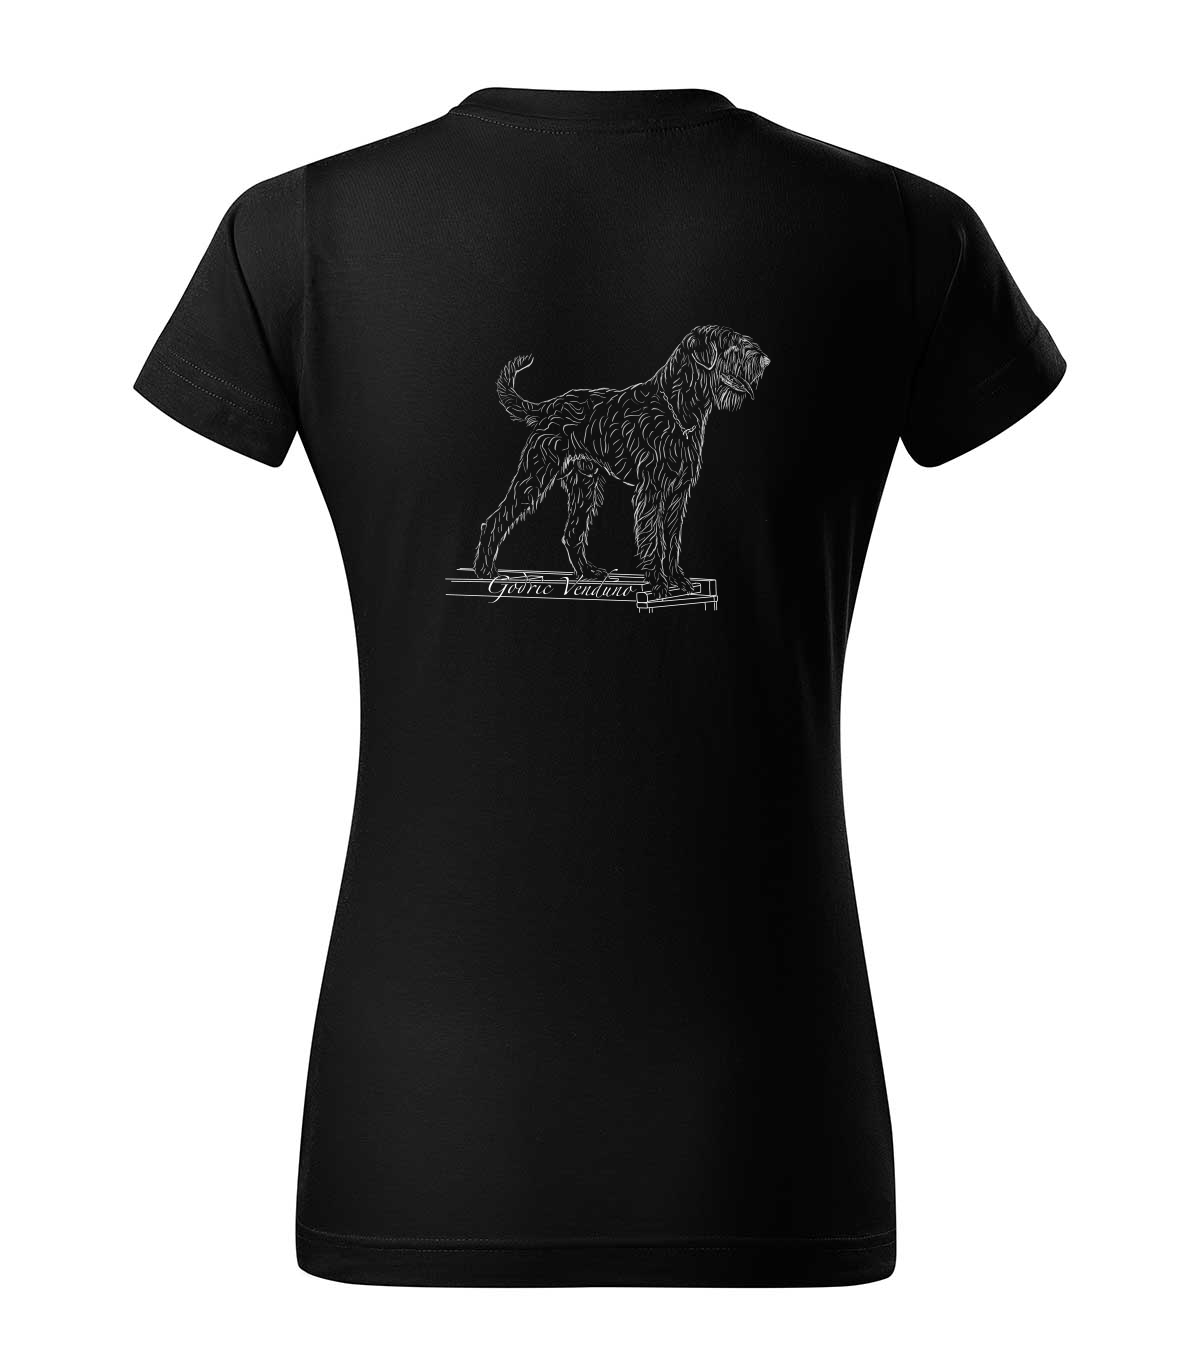 Šlapanický vlk - triko s vlastním motivem - černá